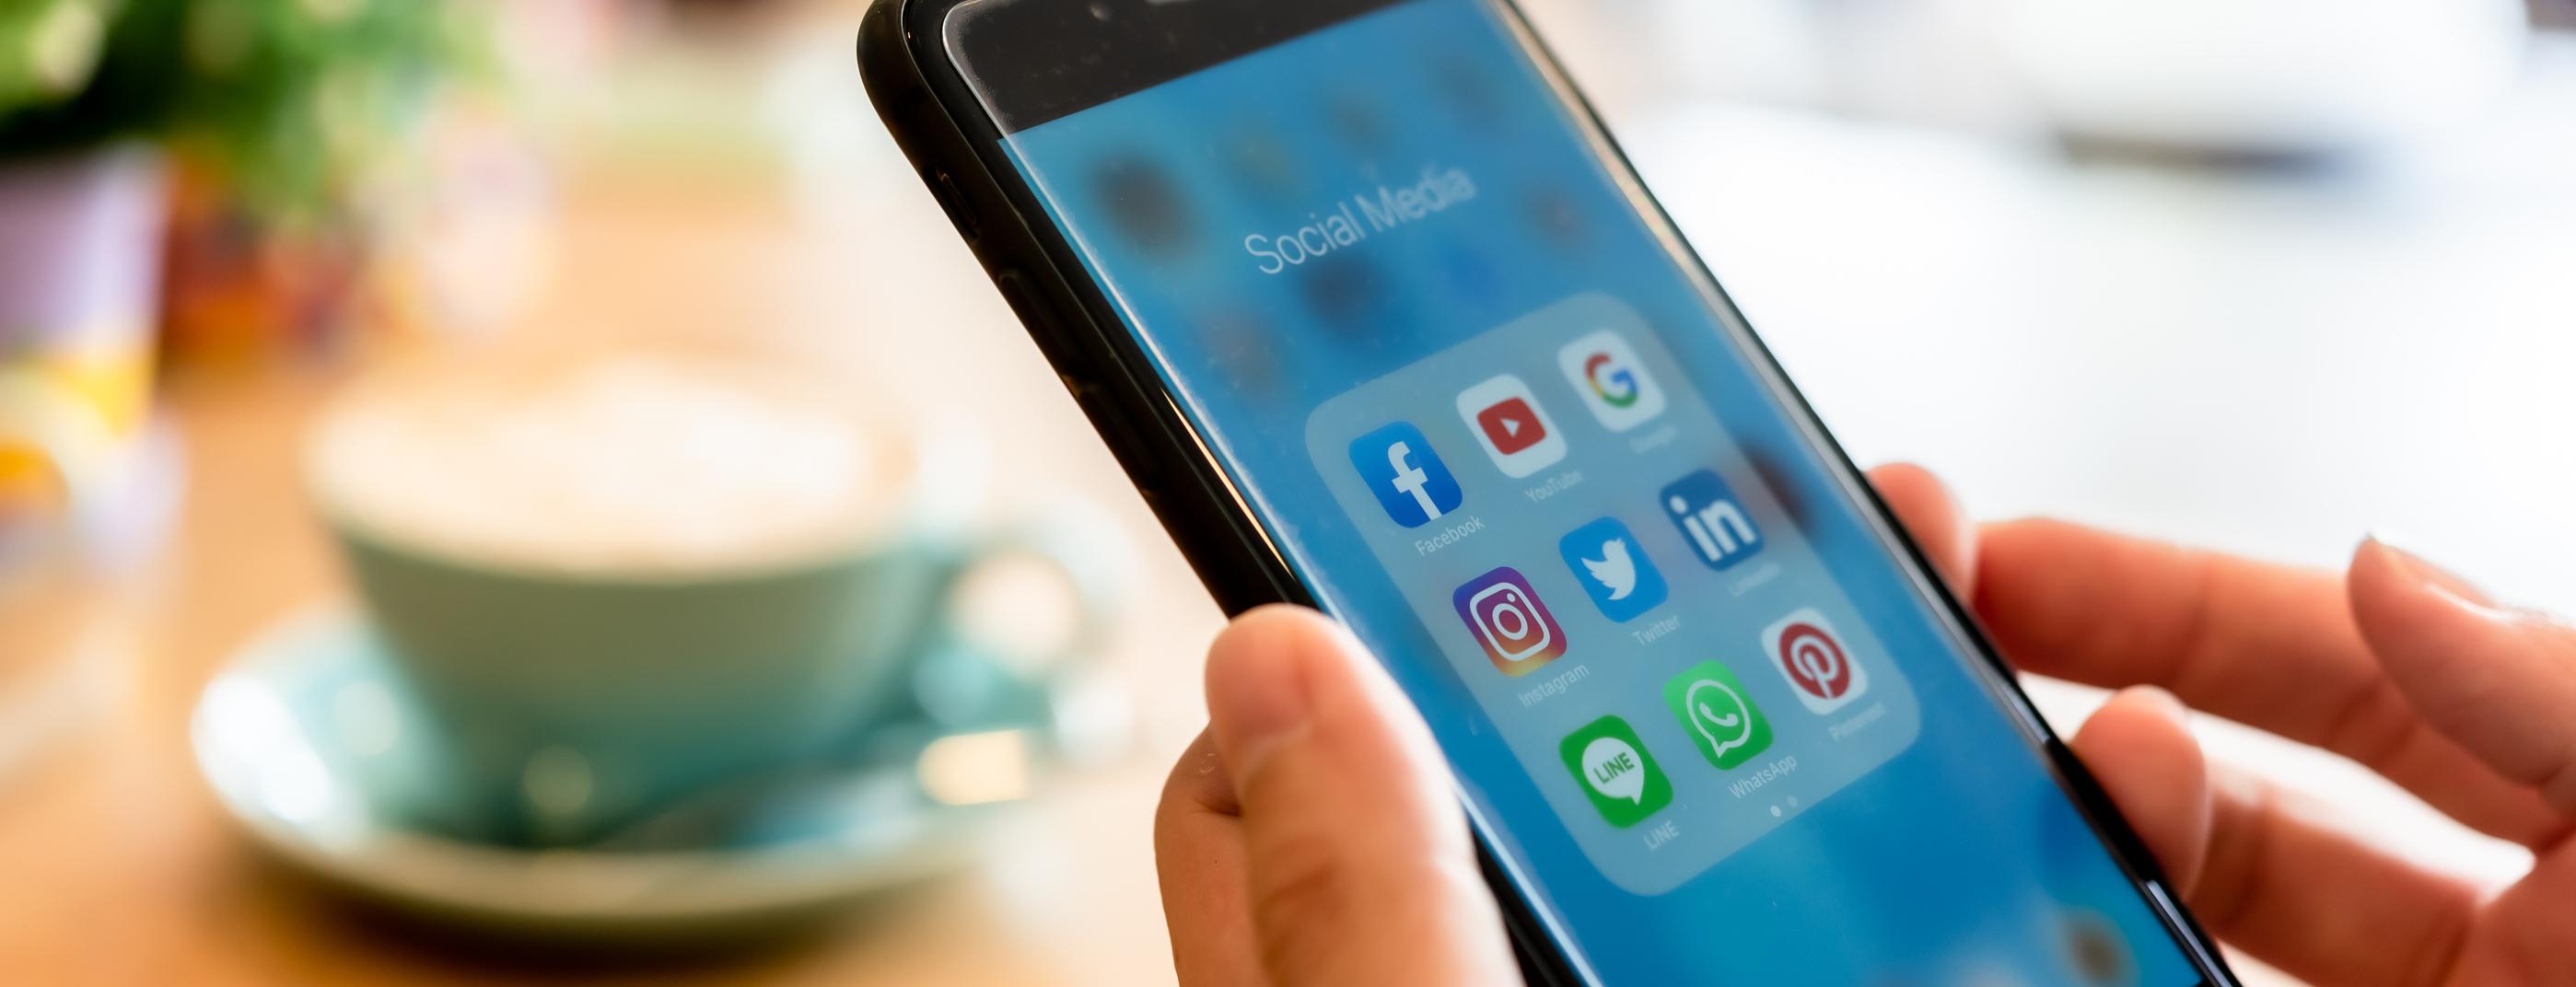 an iphone screen displaying social media